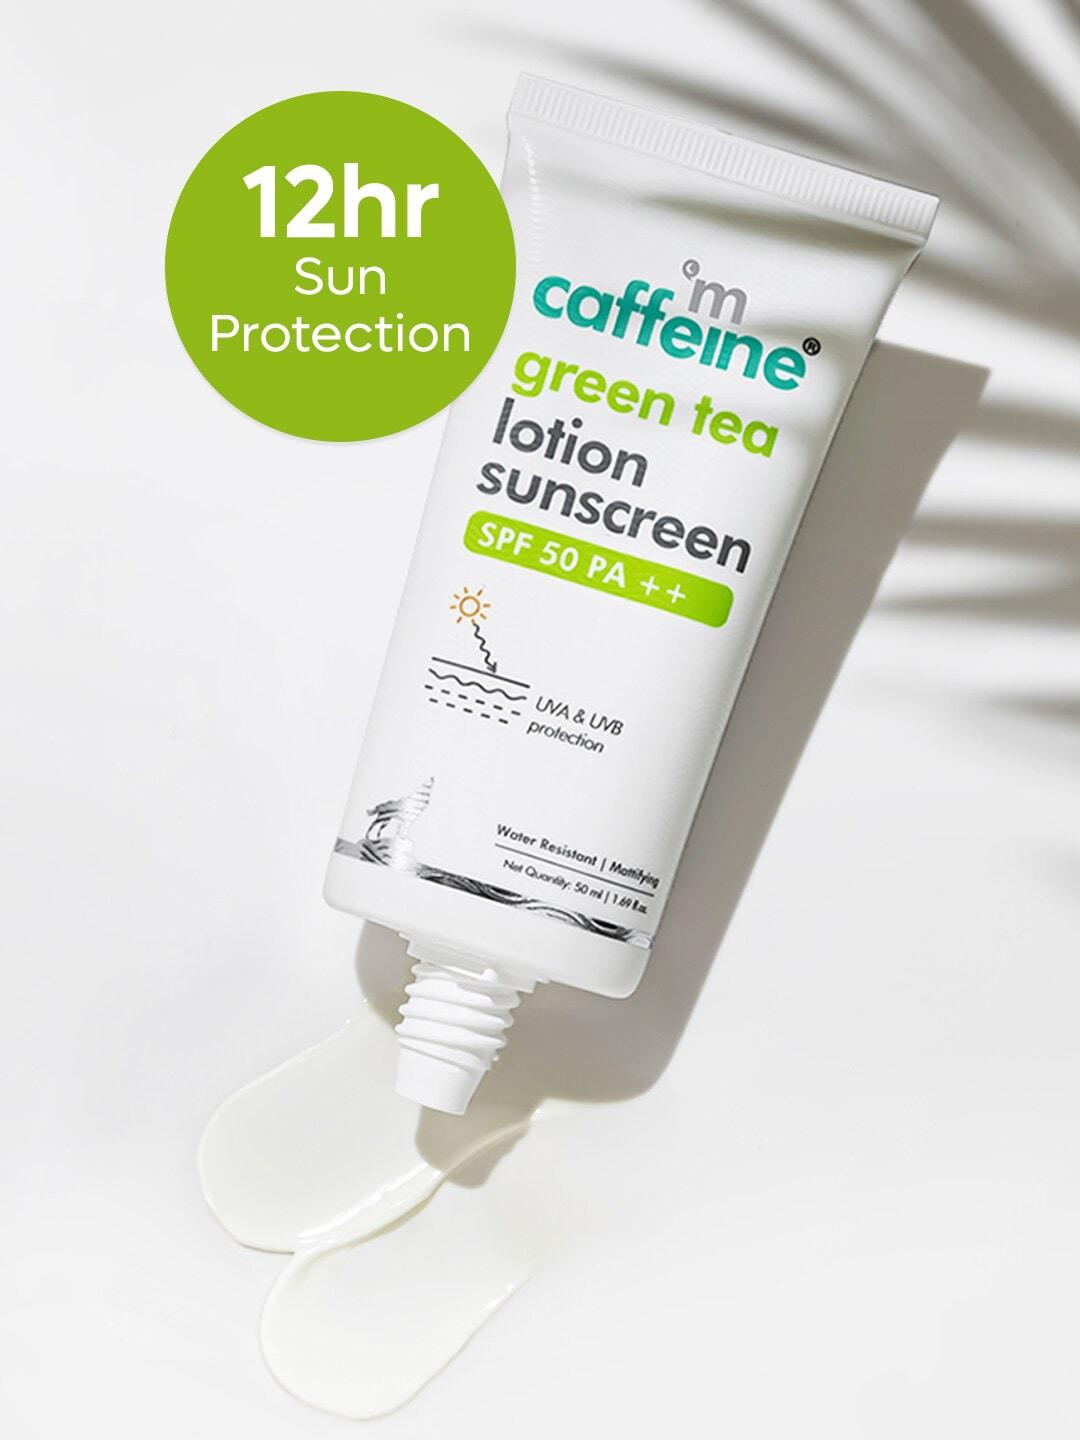 mcaffeine green tea lotion sunscreen spf 50 pa ++ 50 ml